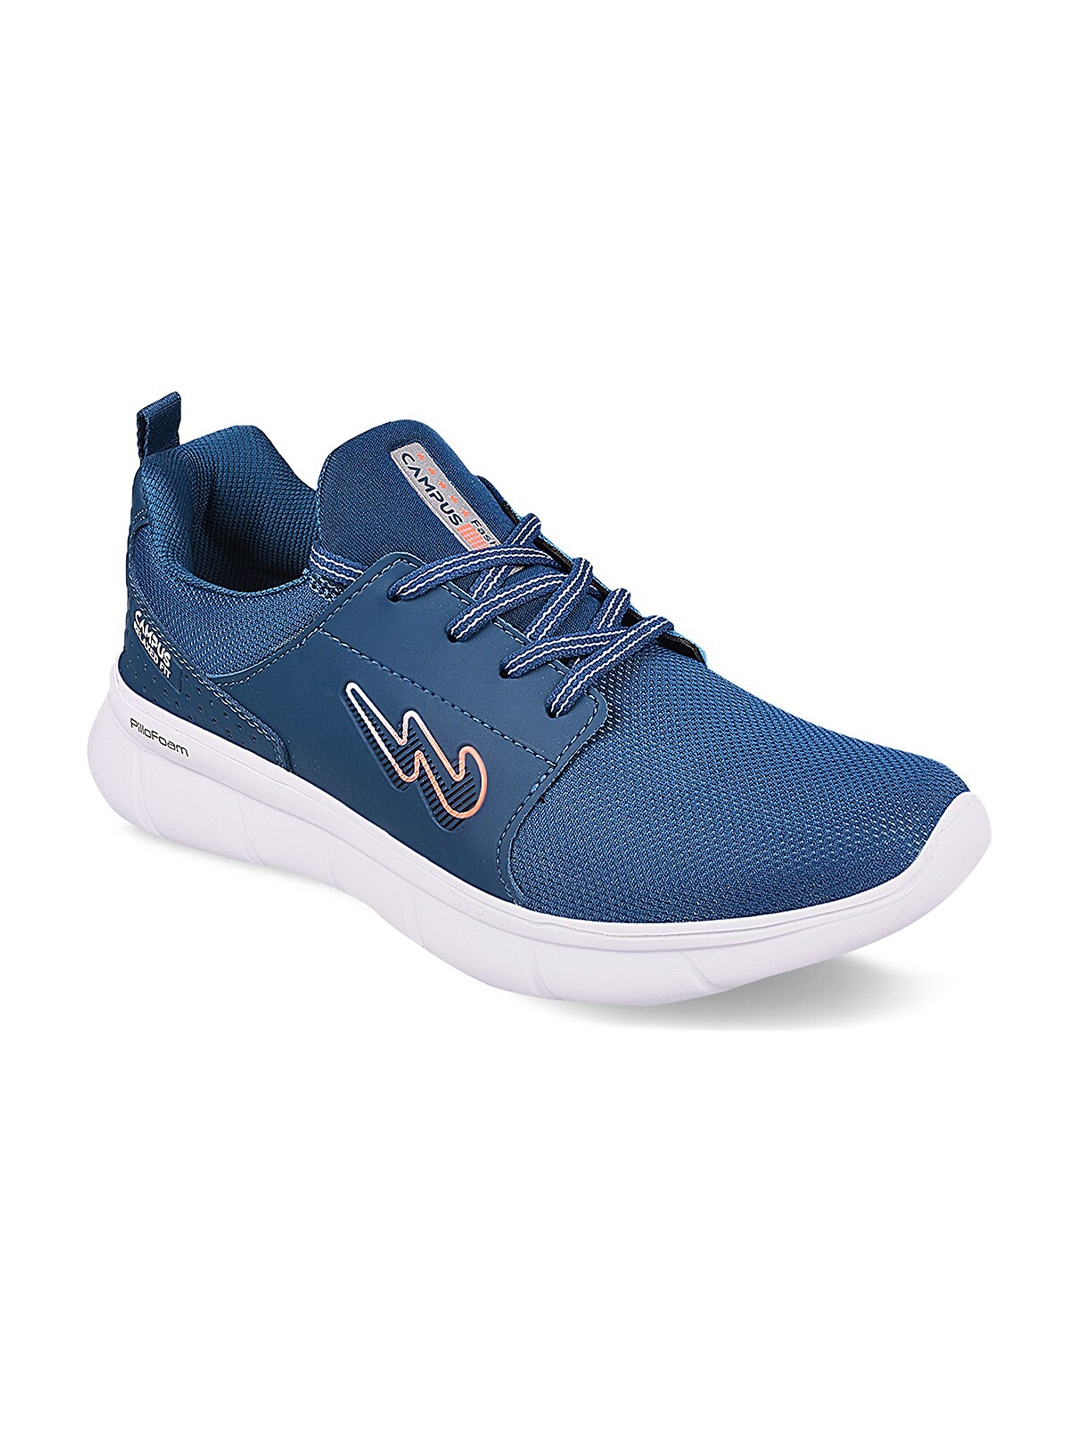 Buy Campus Men Blue Mesh Running Shoes - Sports Shoes for Men 18043656 ...